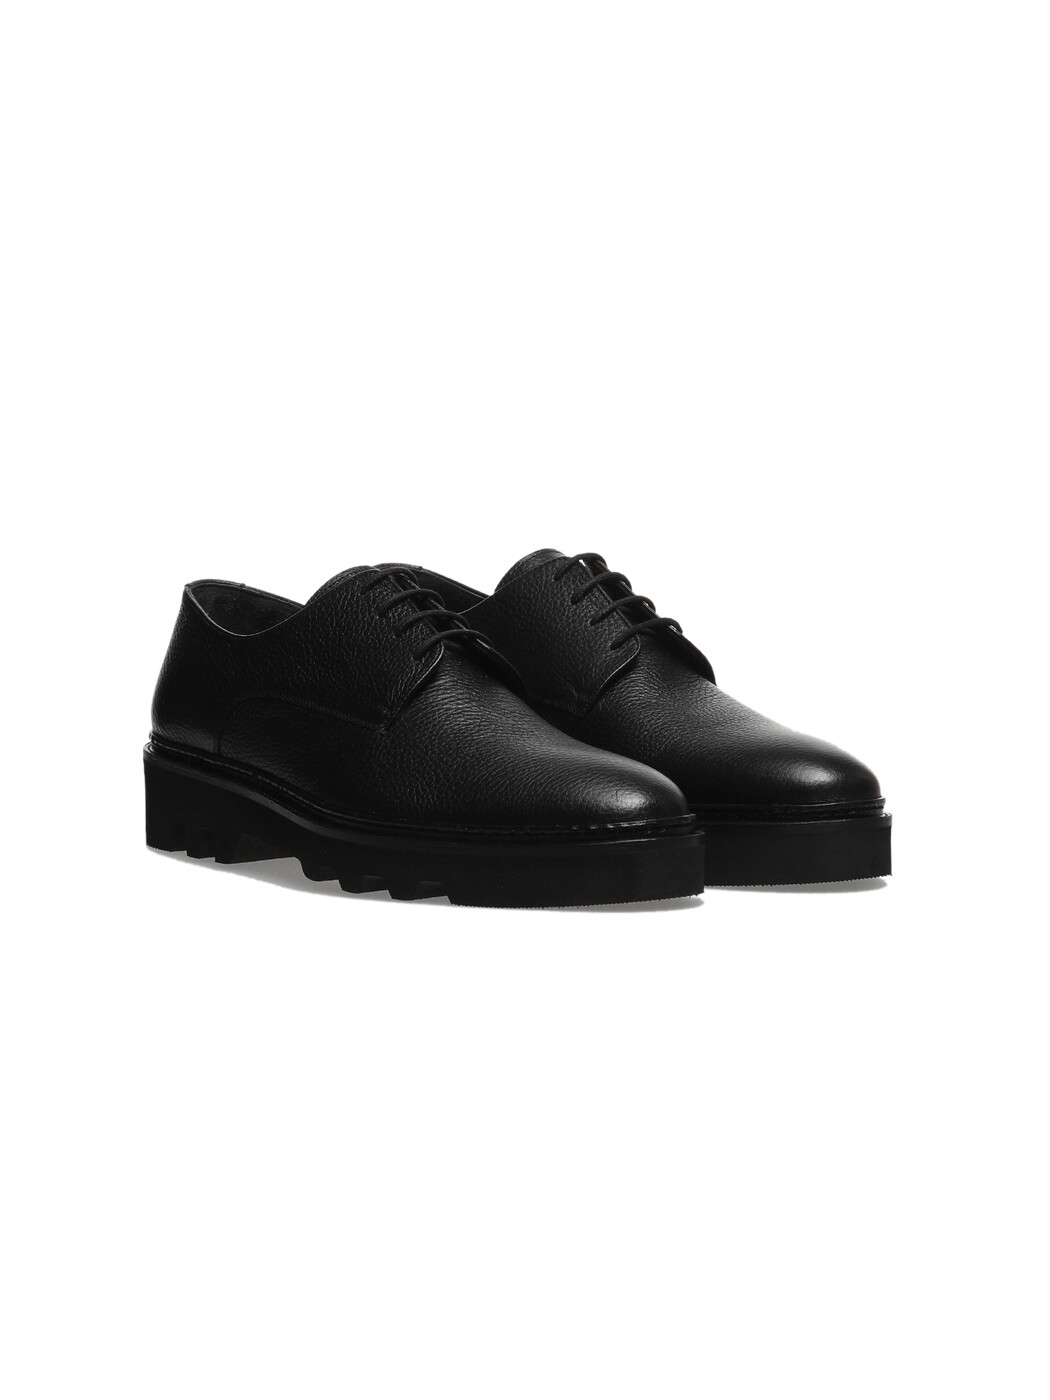 KİP - Siyah Ayakkabı (1)